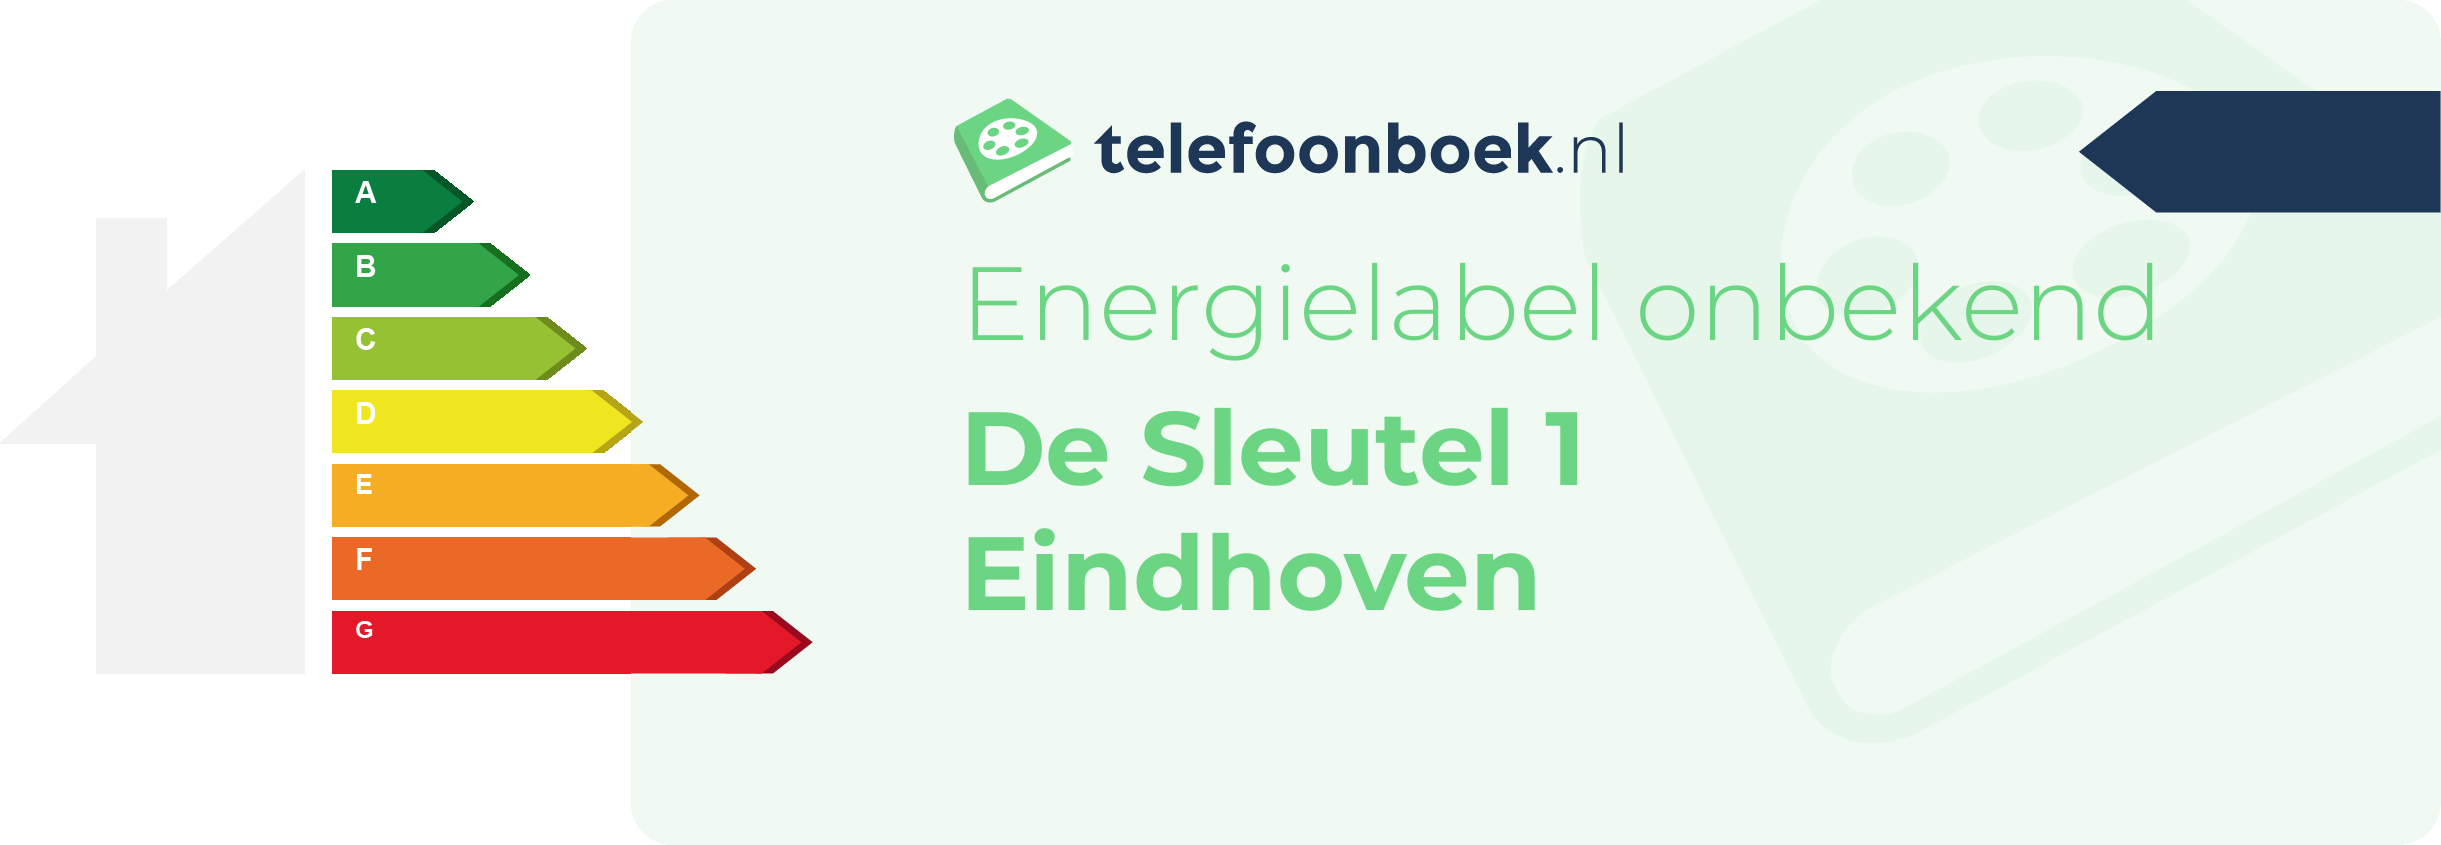 Energielabel De Sleutel 1 Eindhoven